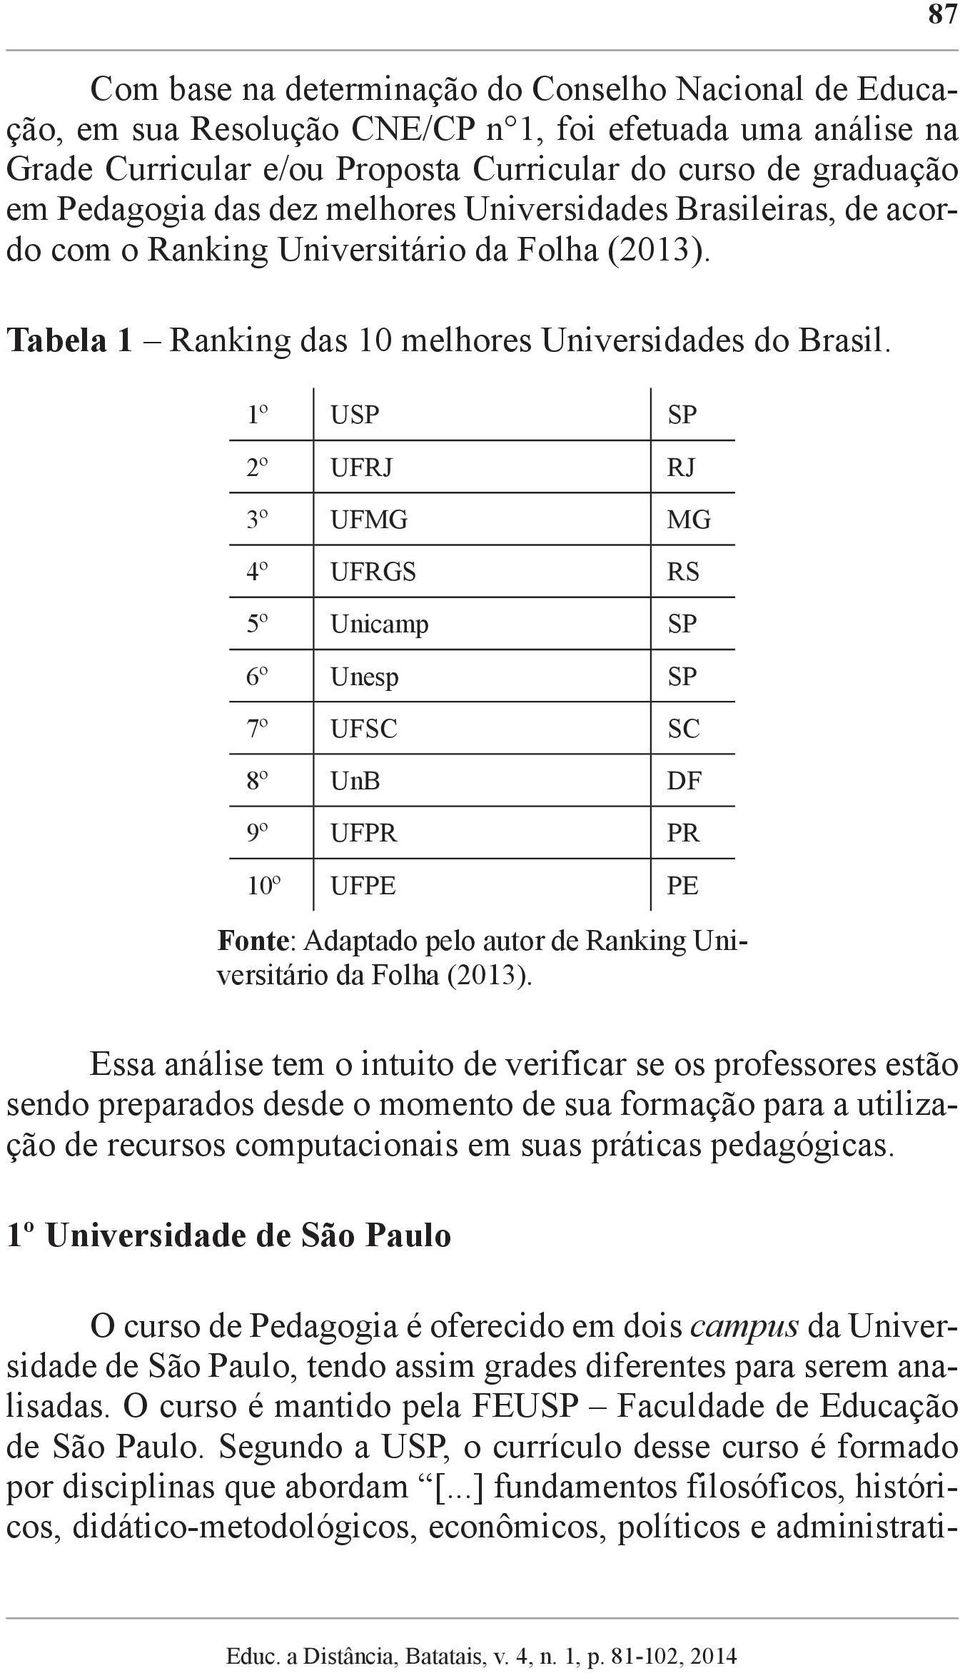 1º USP SP 2º UFRJ RJ 3º UFMG MG 4º UFRGS RS 5º Unicamp SP 6º Unesp SP 7º UFSC SC 8º UnB DF 9º UFPR PR 10º UFPE PE Fonte: Adaptado pelo autor de Ranking Universitário da Folha (2013).